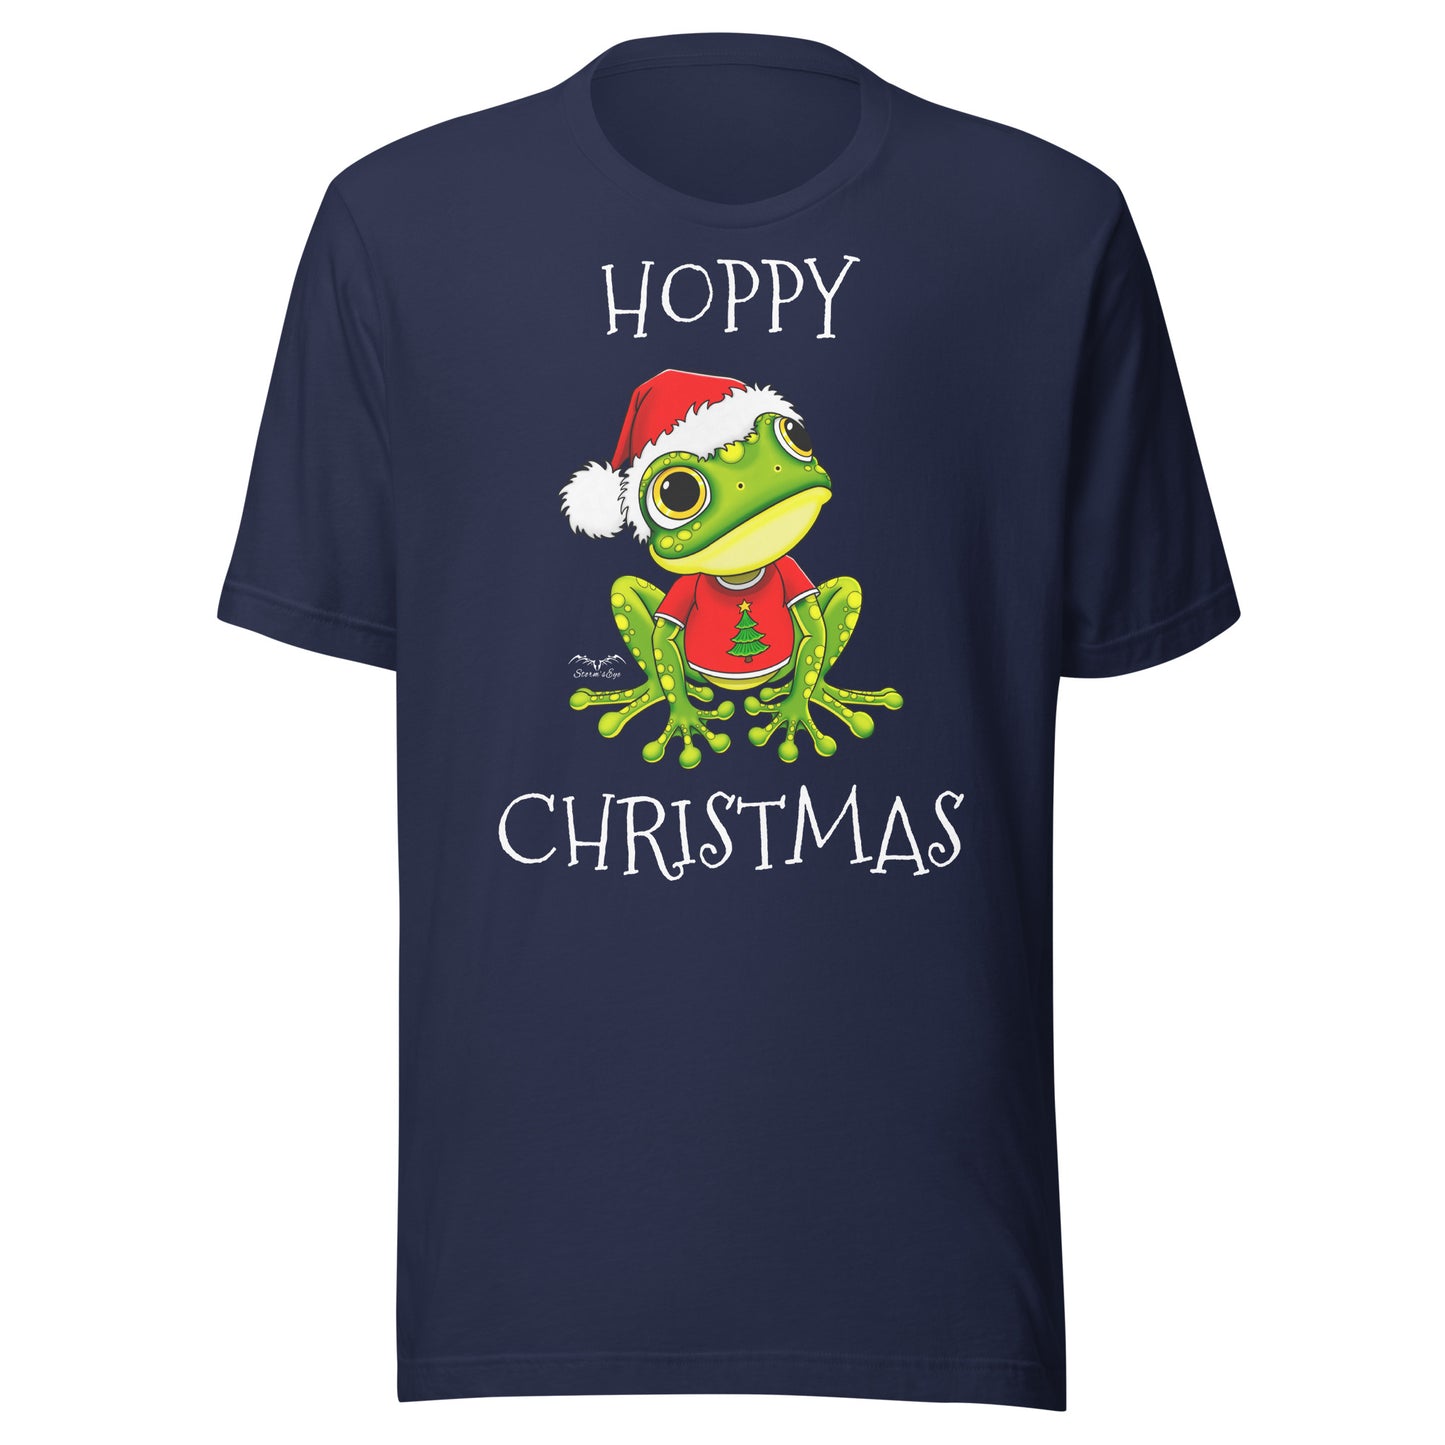 stormseye design hoppy christmas santa frog T shirt, flat view navy blue